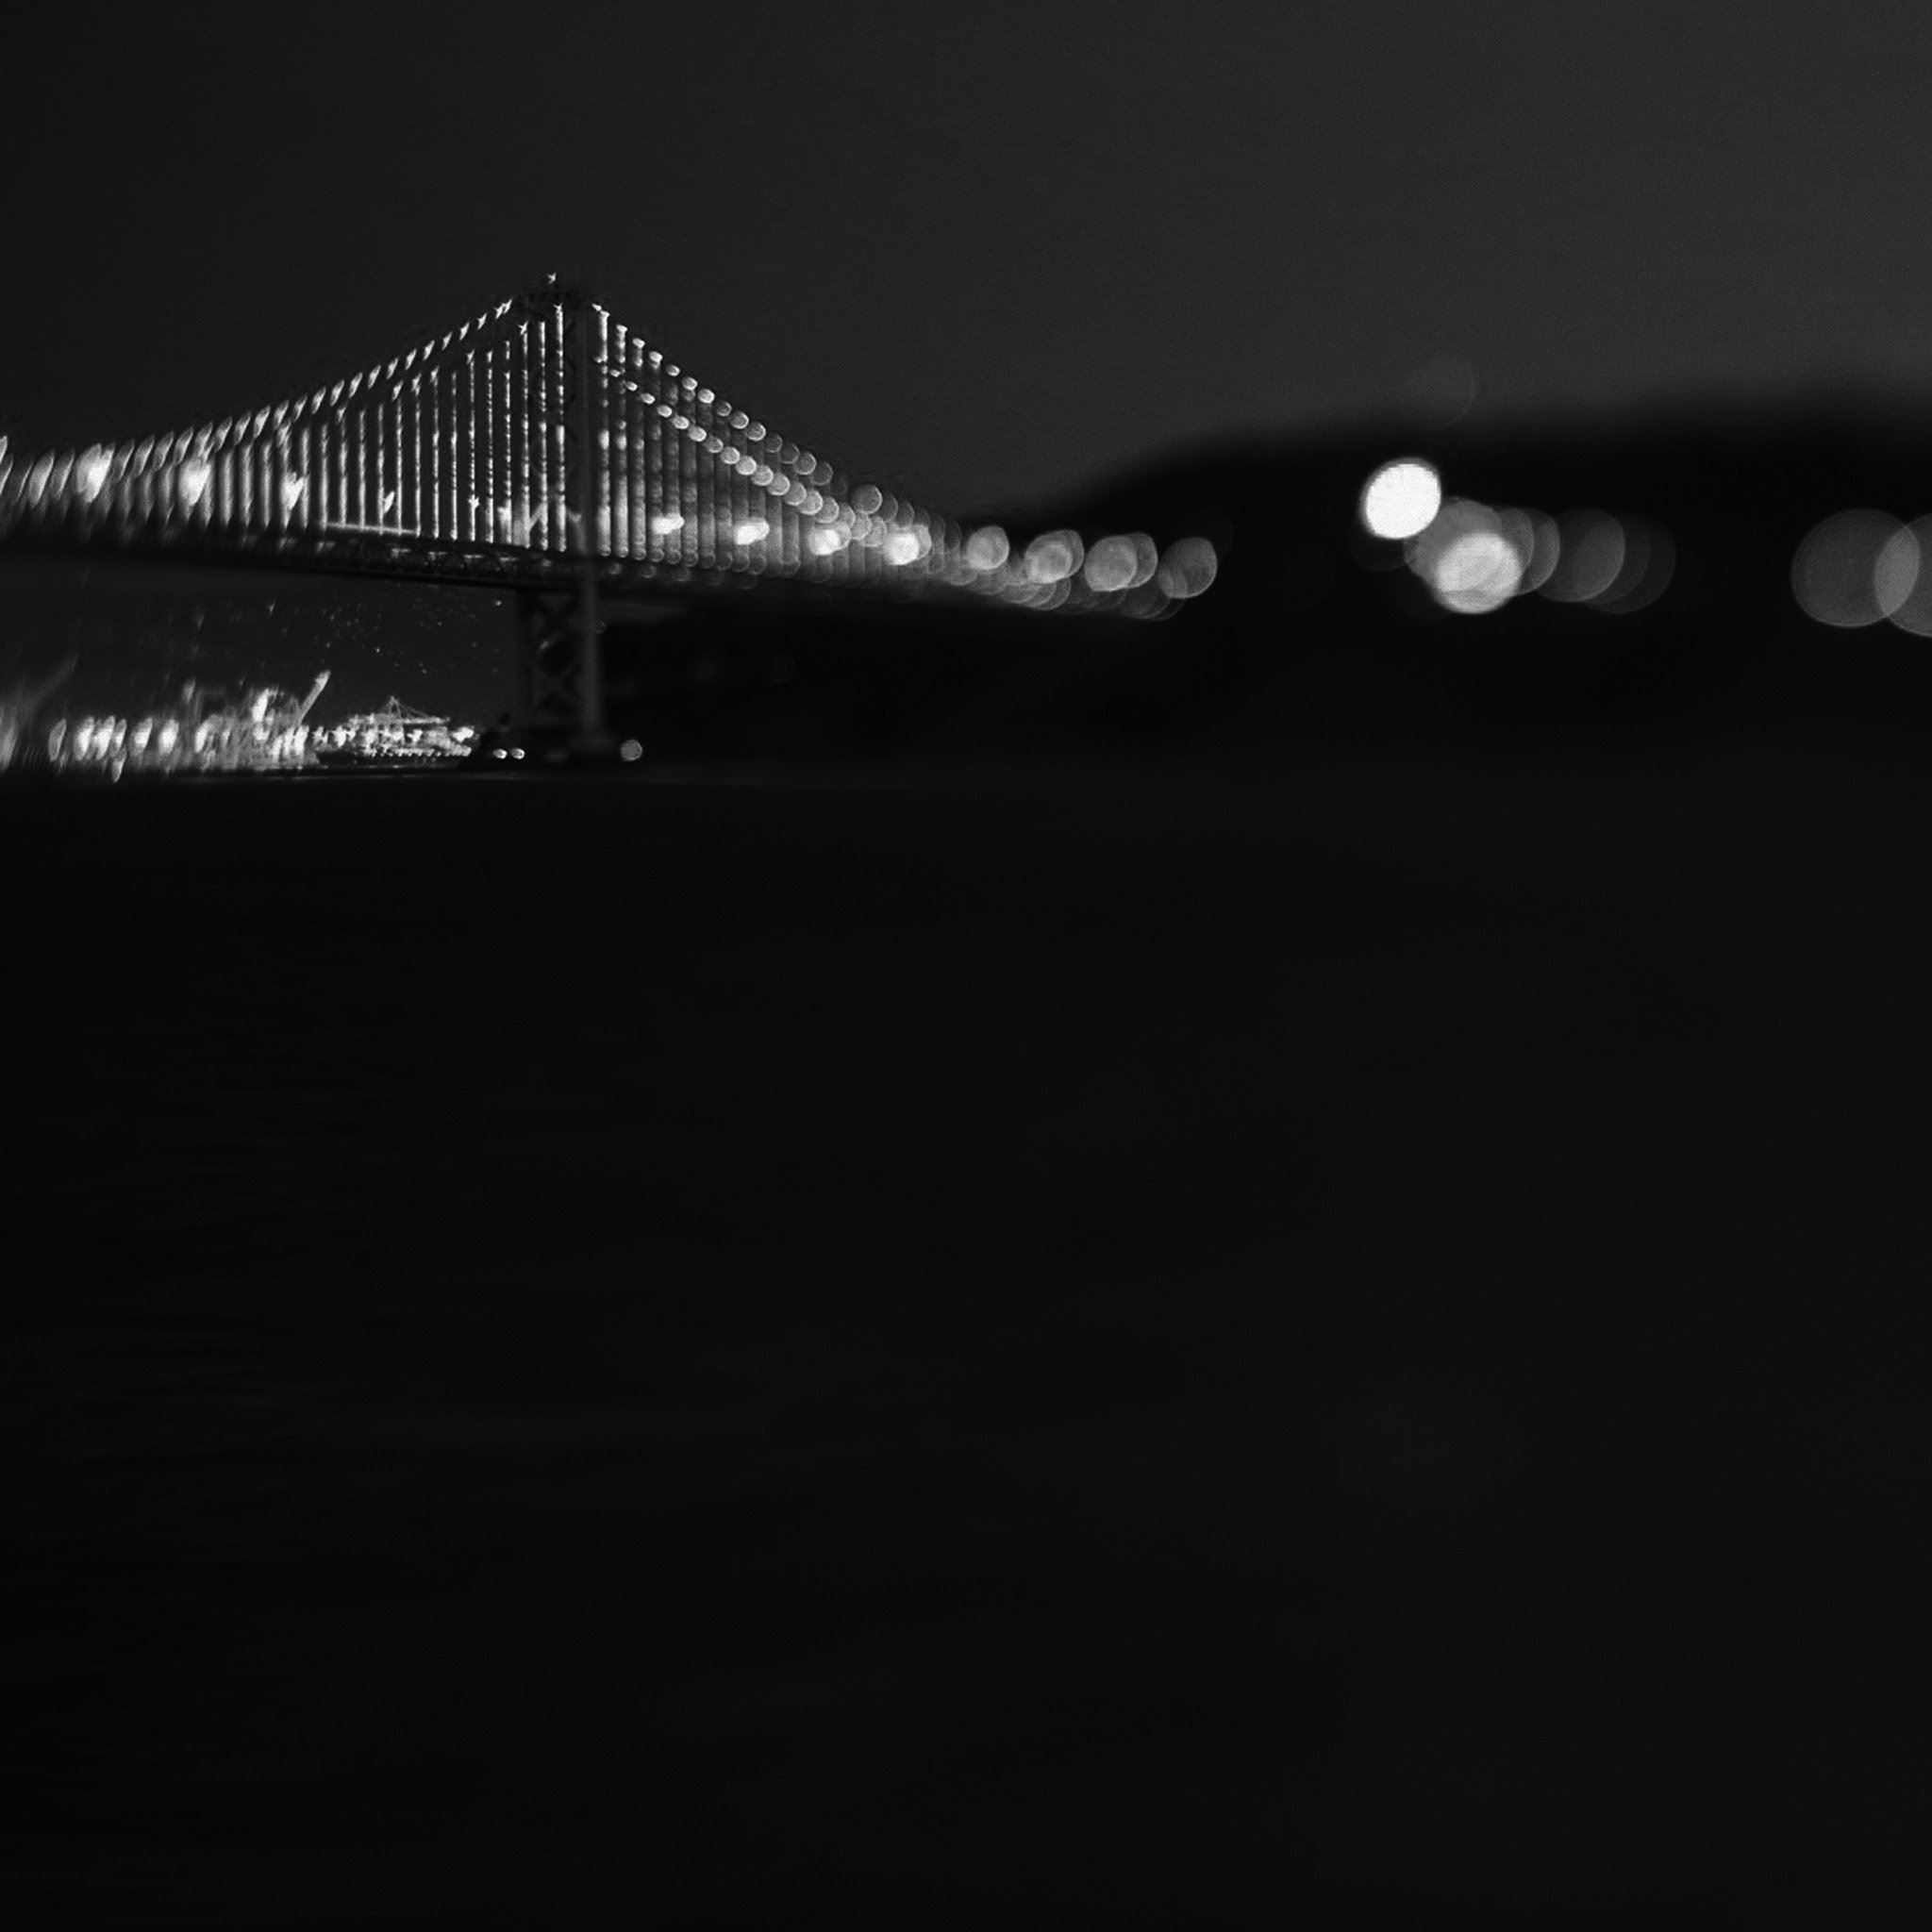 Nature California San Francisco Bridge Over Lake iPad Air wallpaper 